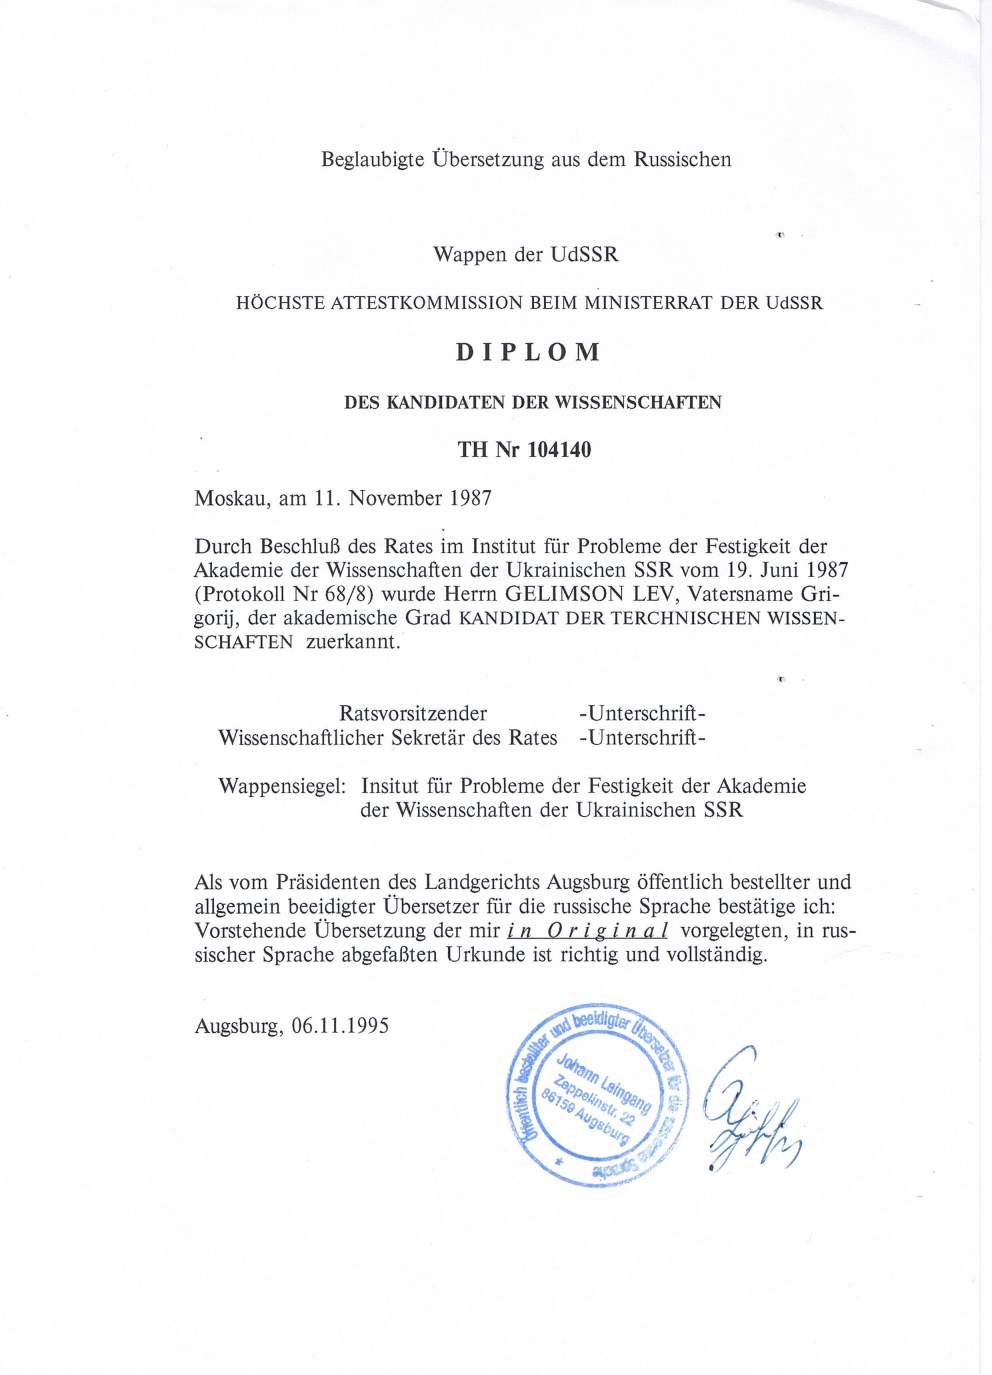 Ph. D. & Dr. Sc. Lev Grigorevic Gelimson: Ph. D. Diploma Translation